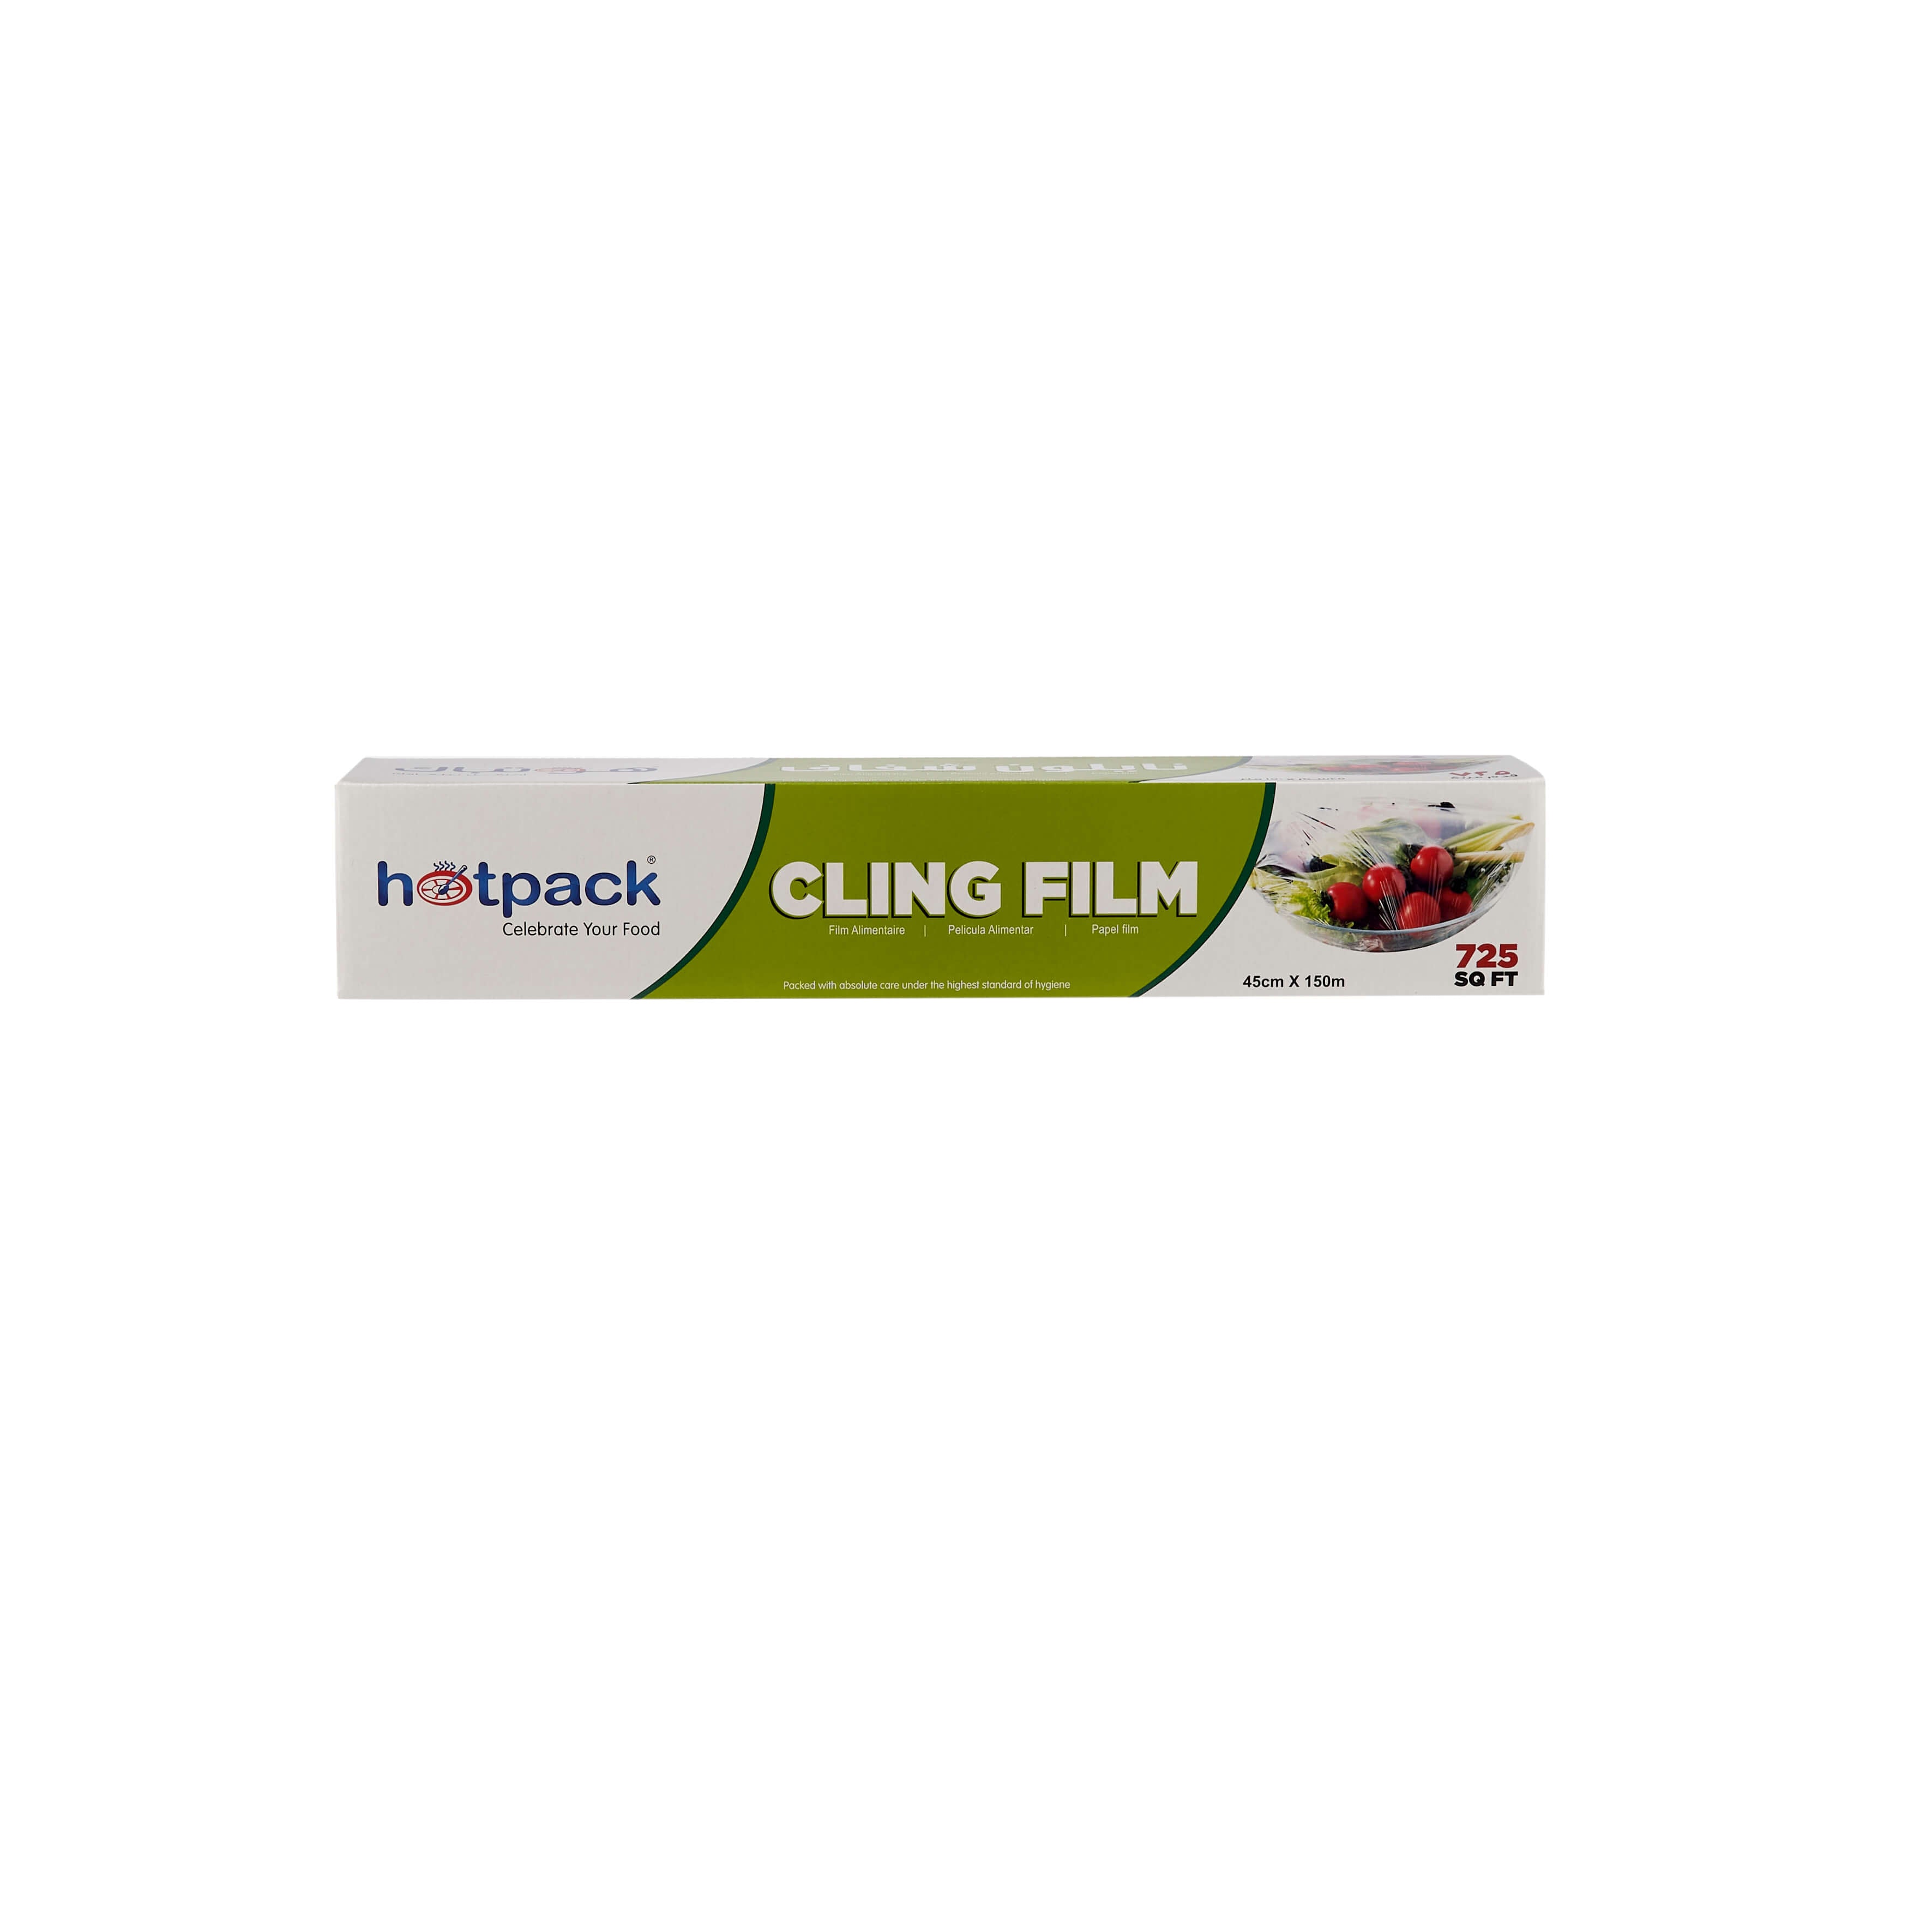 Cling Wrap Width 45 cm, 725 sqft - Hotpack Global